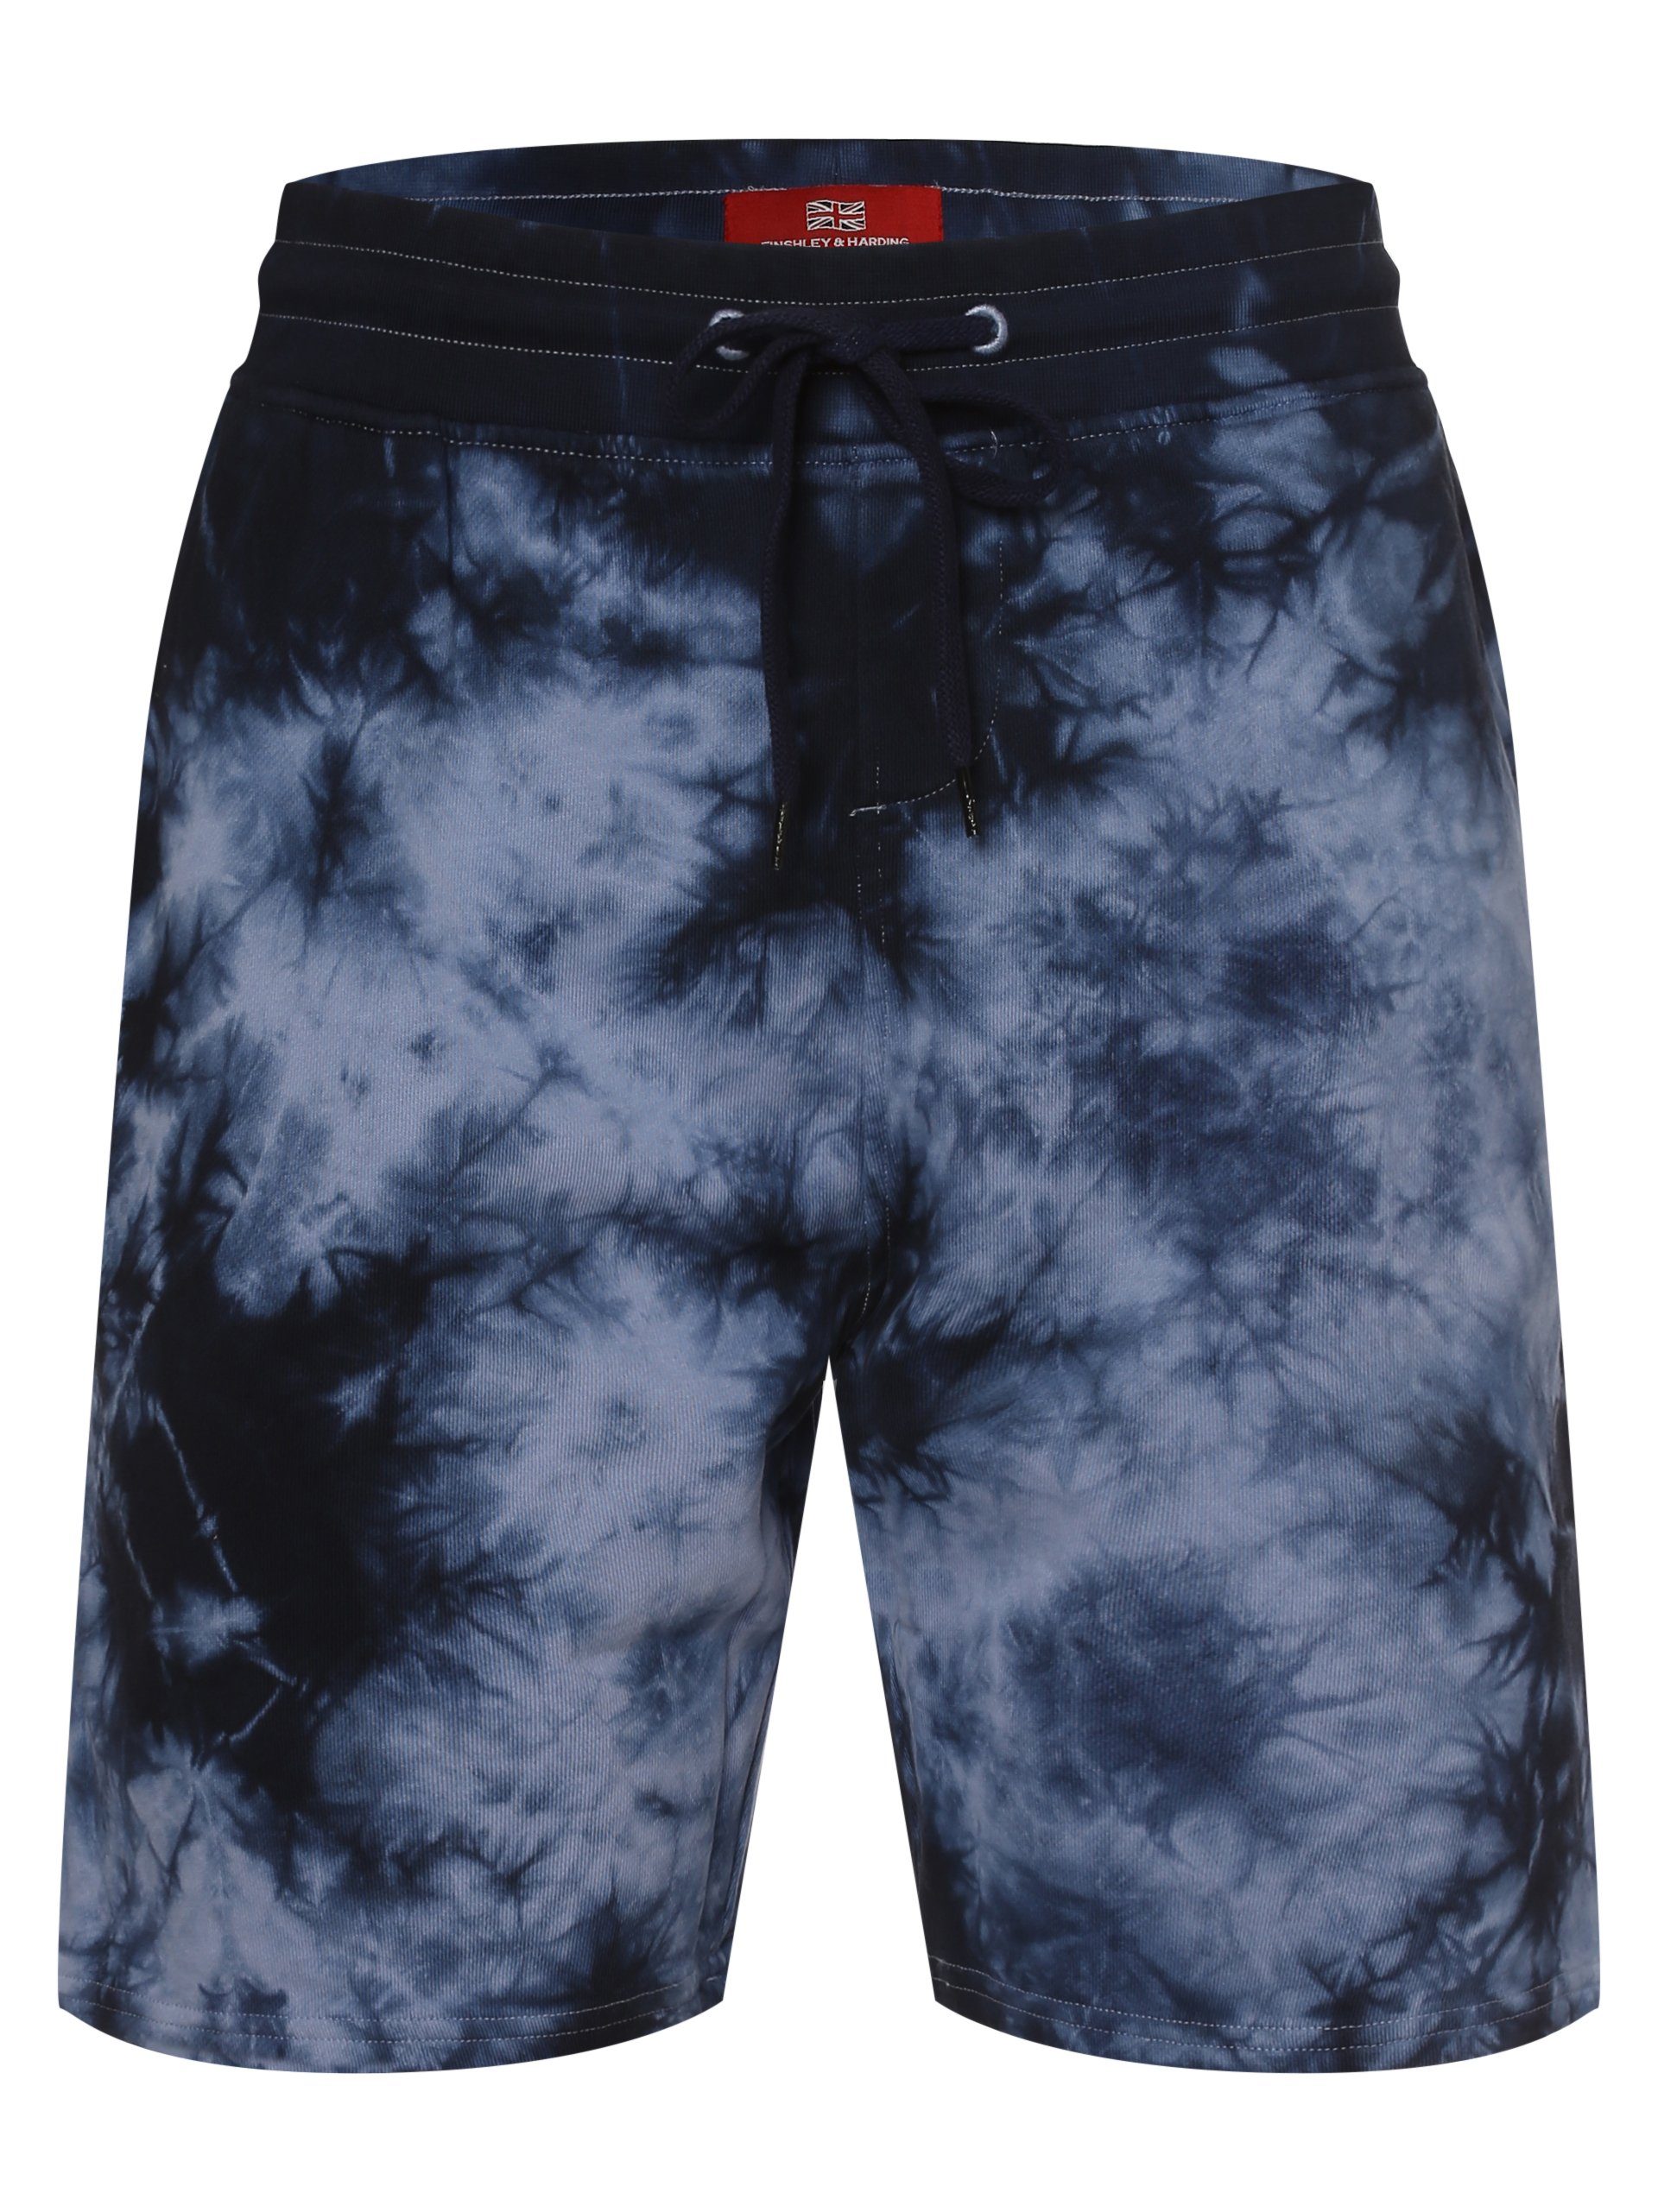 Finshley & Harding London Shorts | Shorts